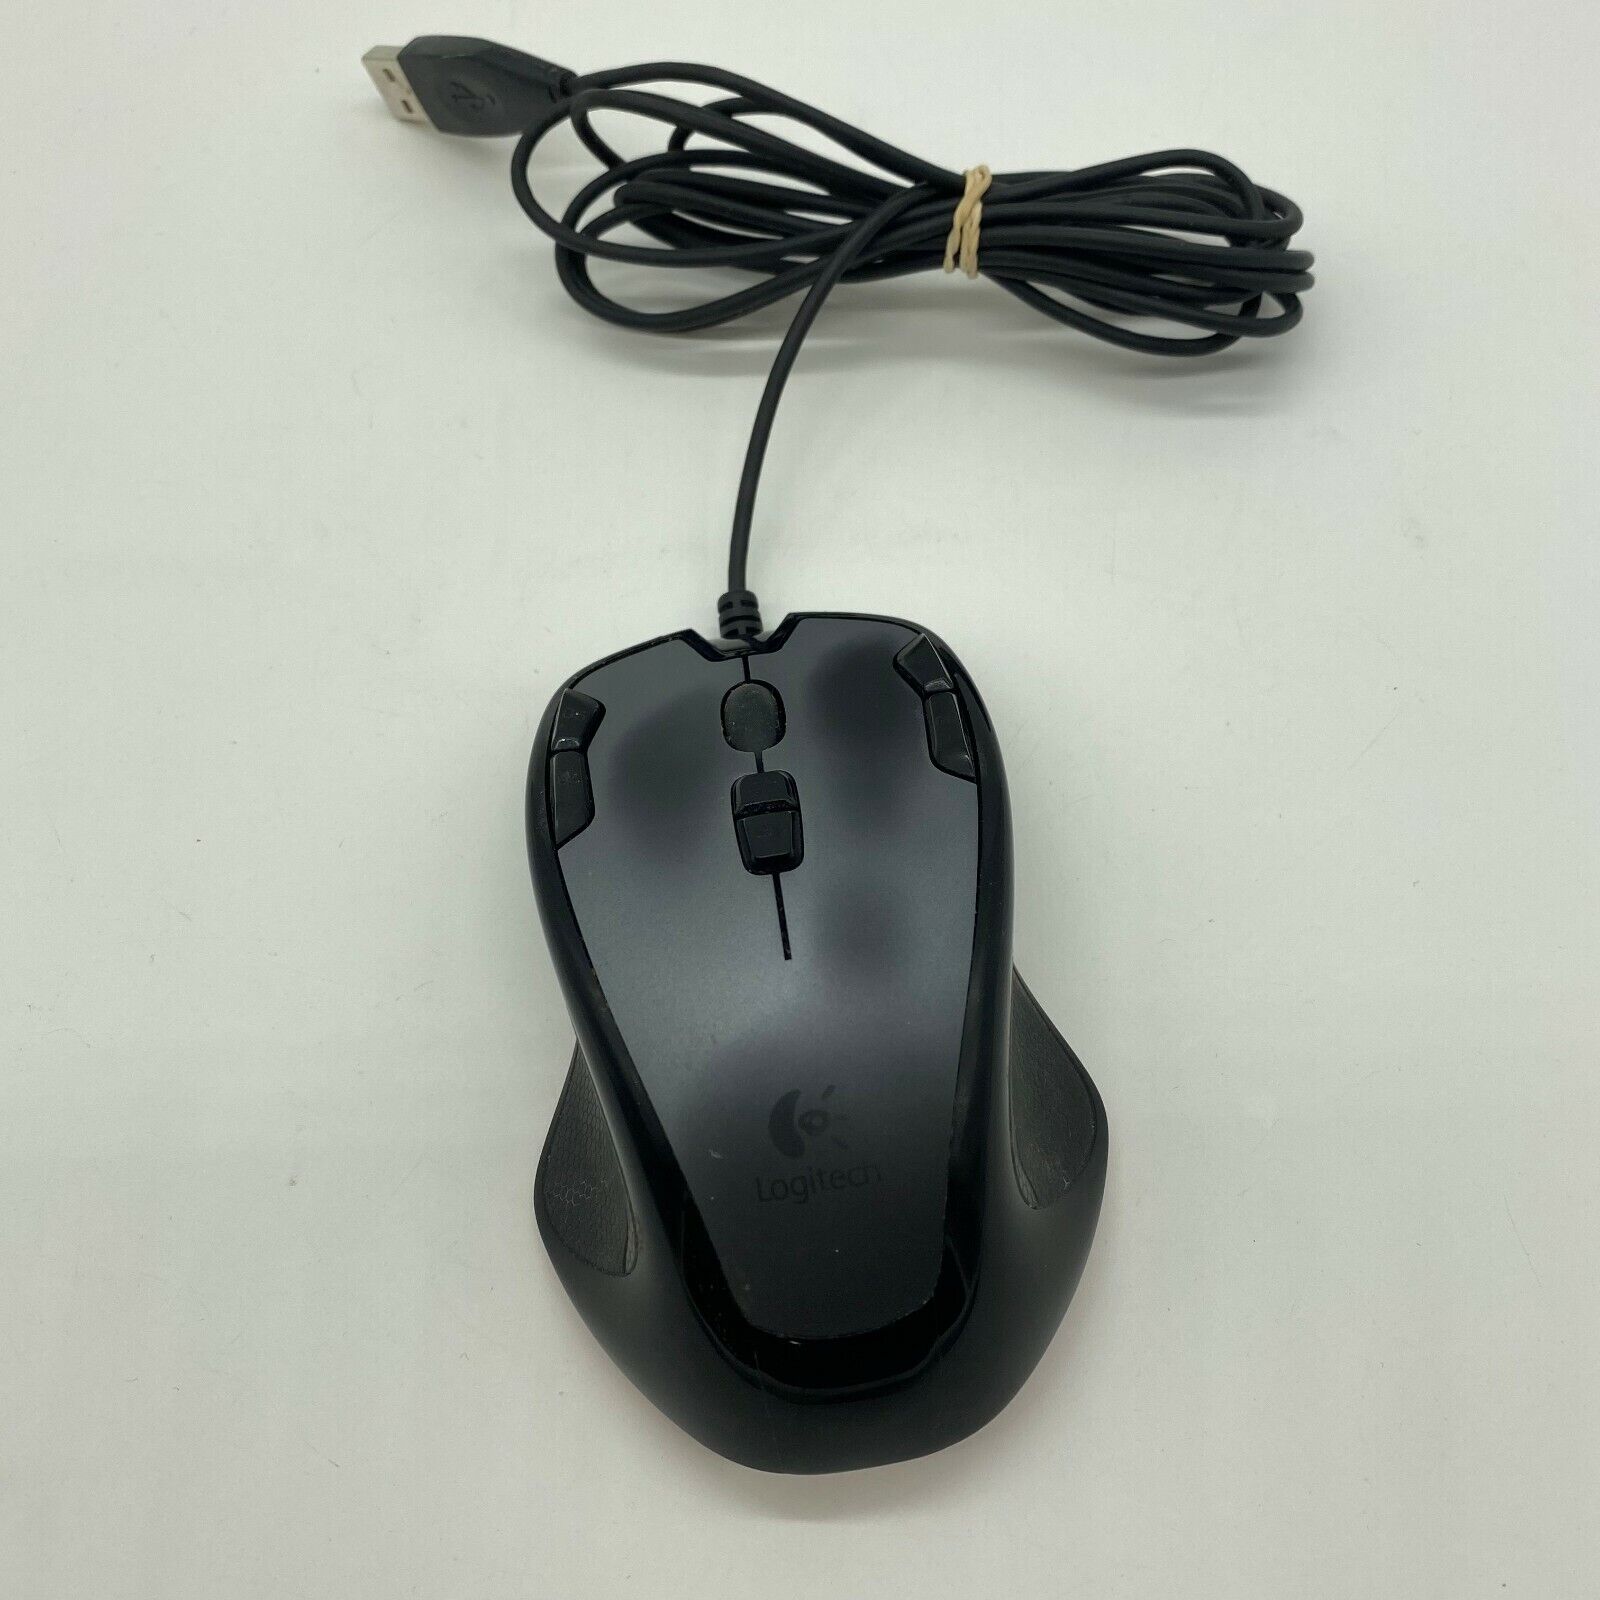 Logitech G300 Gaming Computer Mouse USB Black Red M-U0029 Tested Works Worn